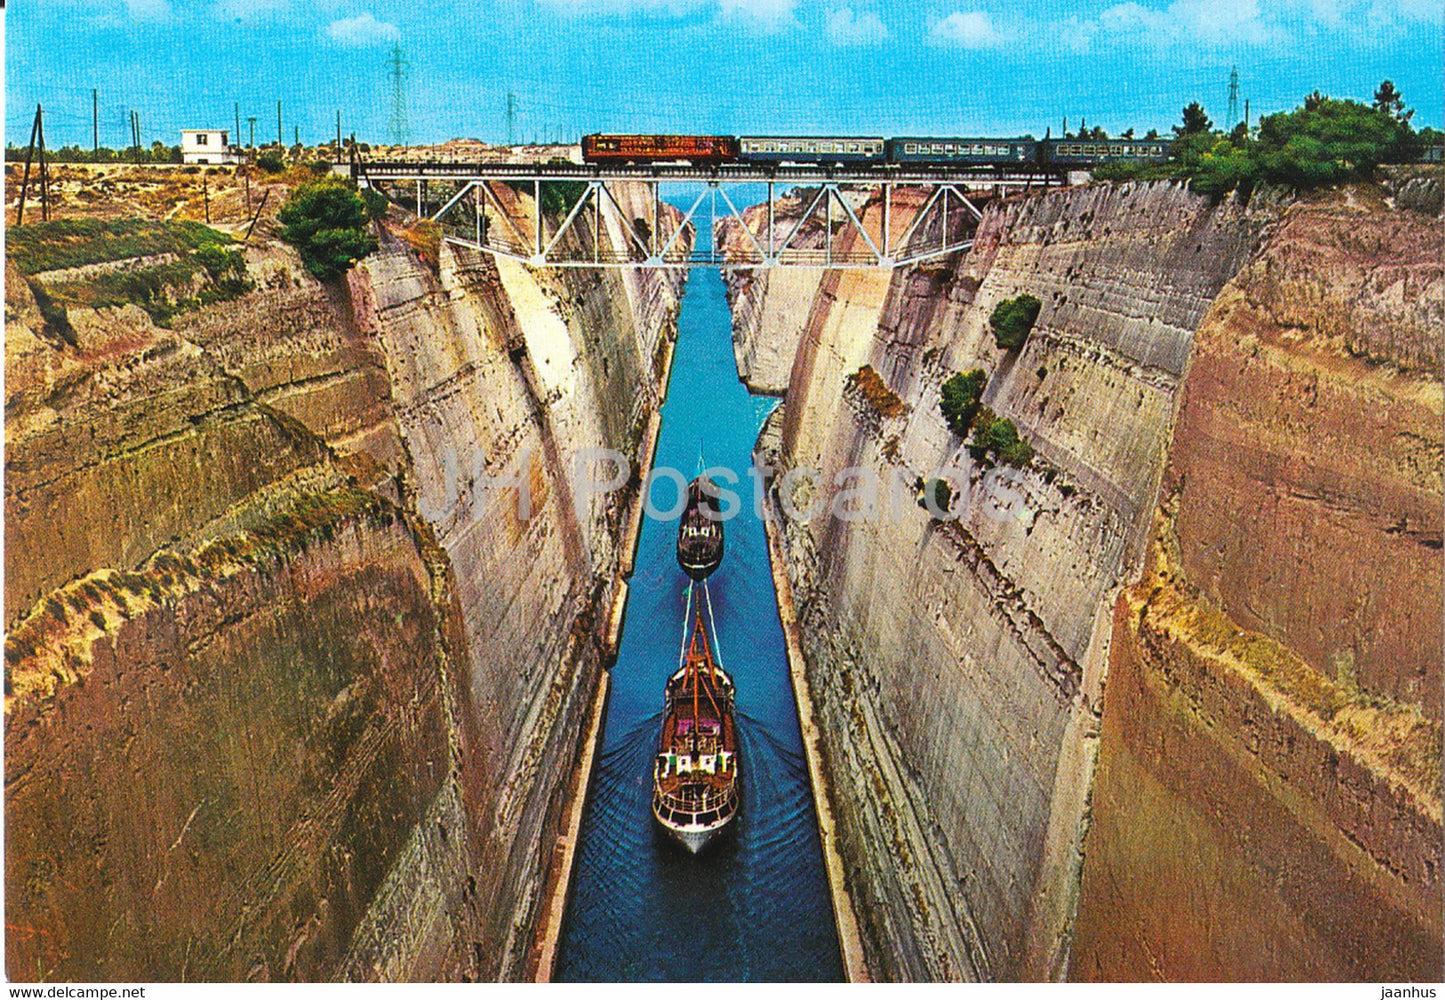 Corinth - canal - ship - train - 214 - Greece - unused - JH Postcards